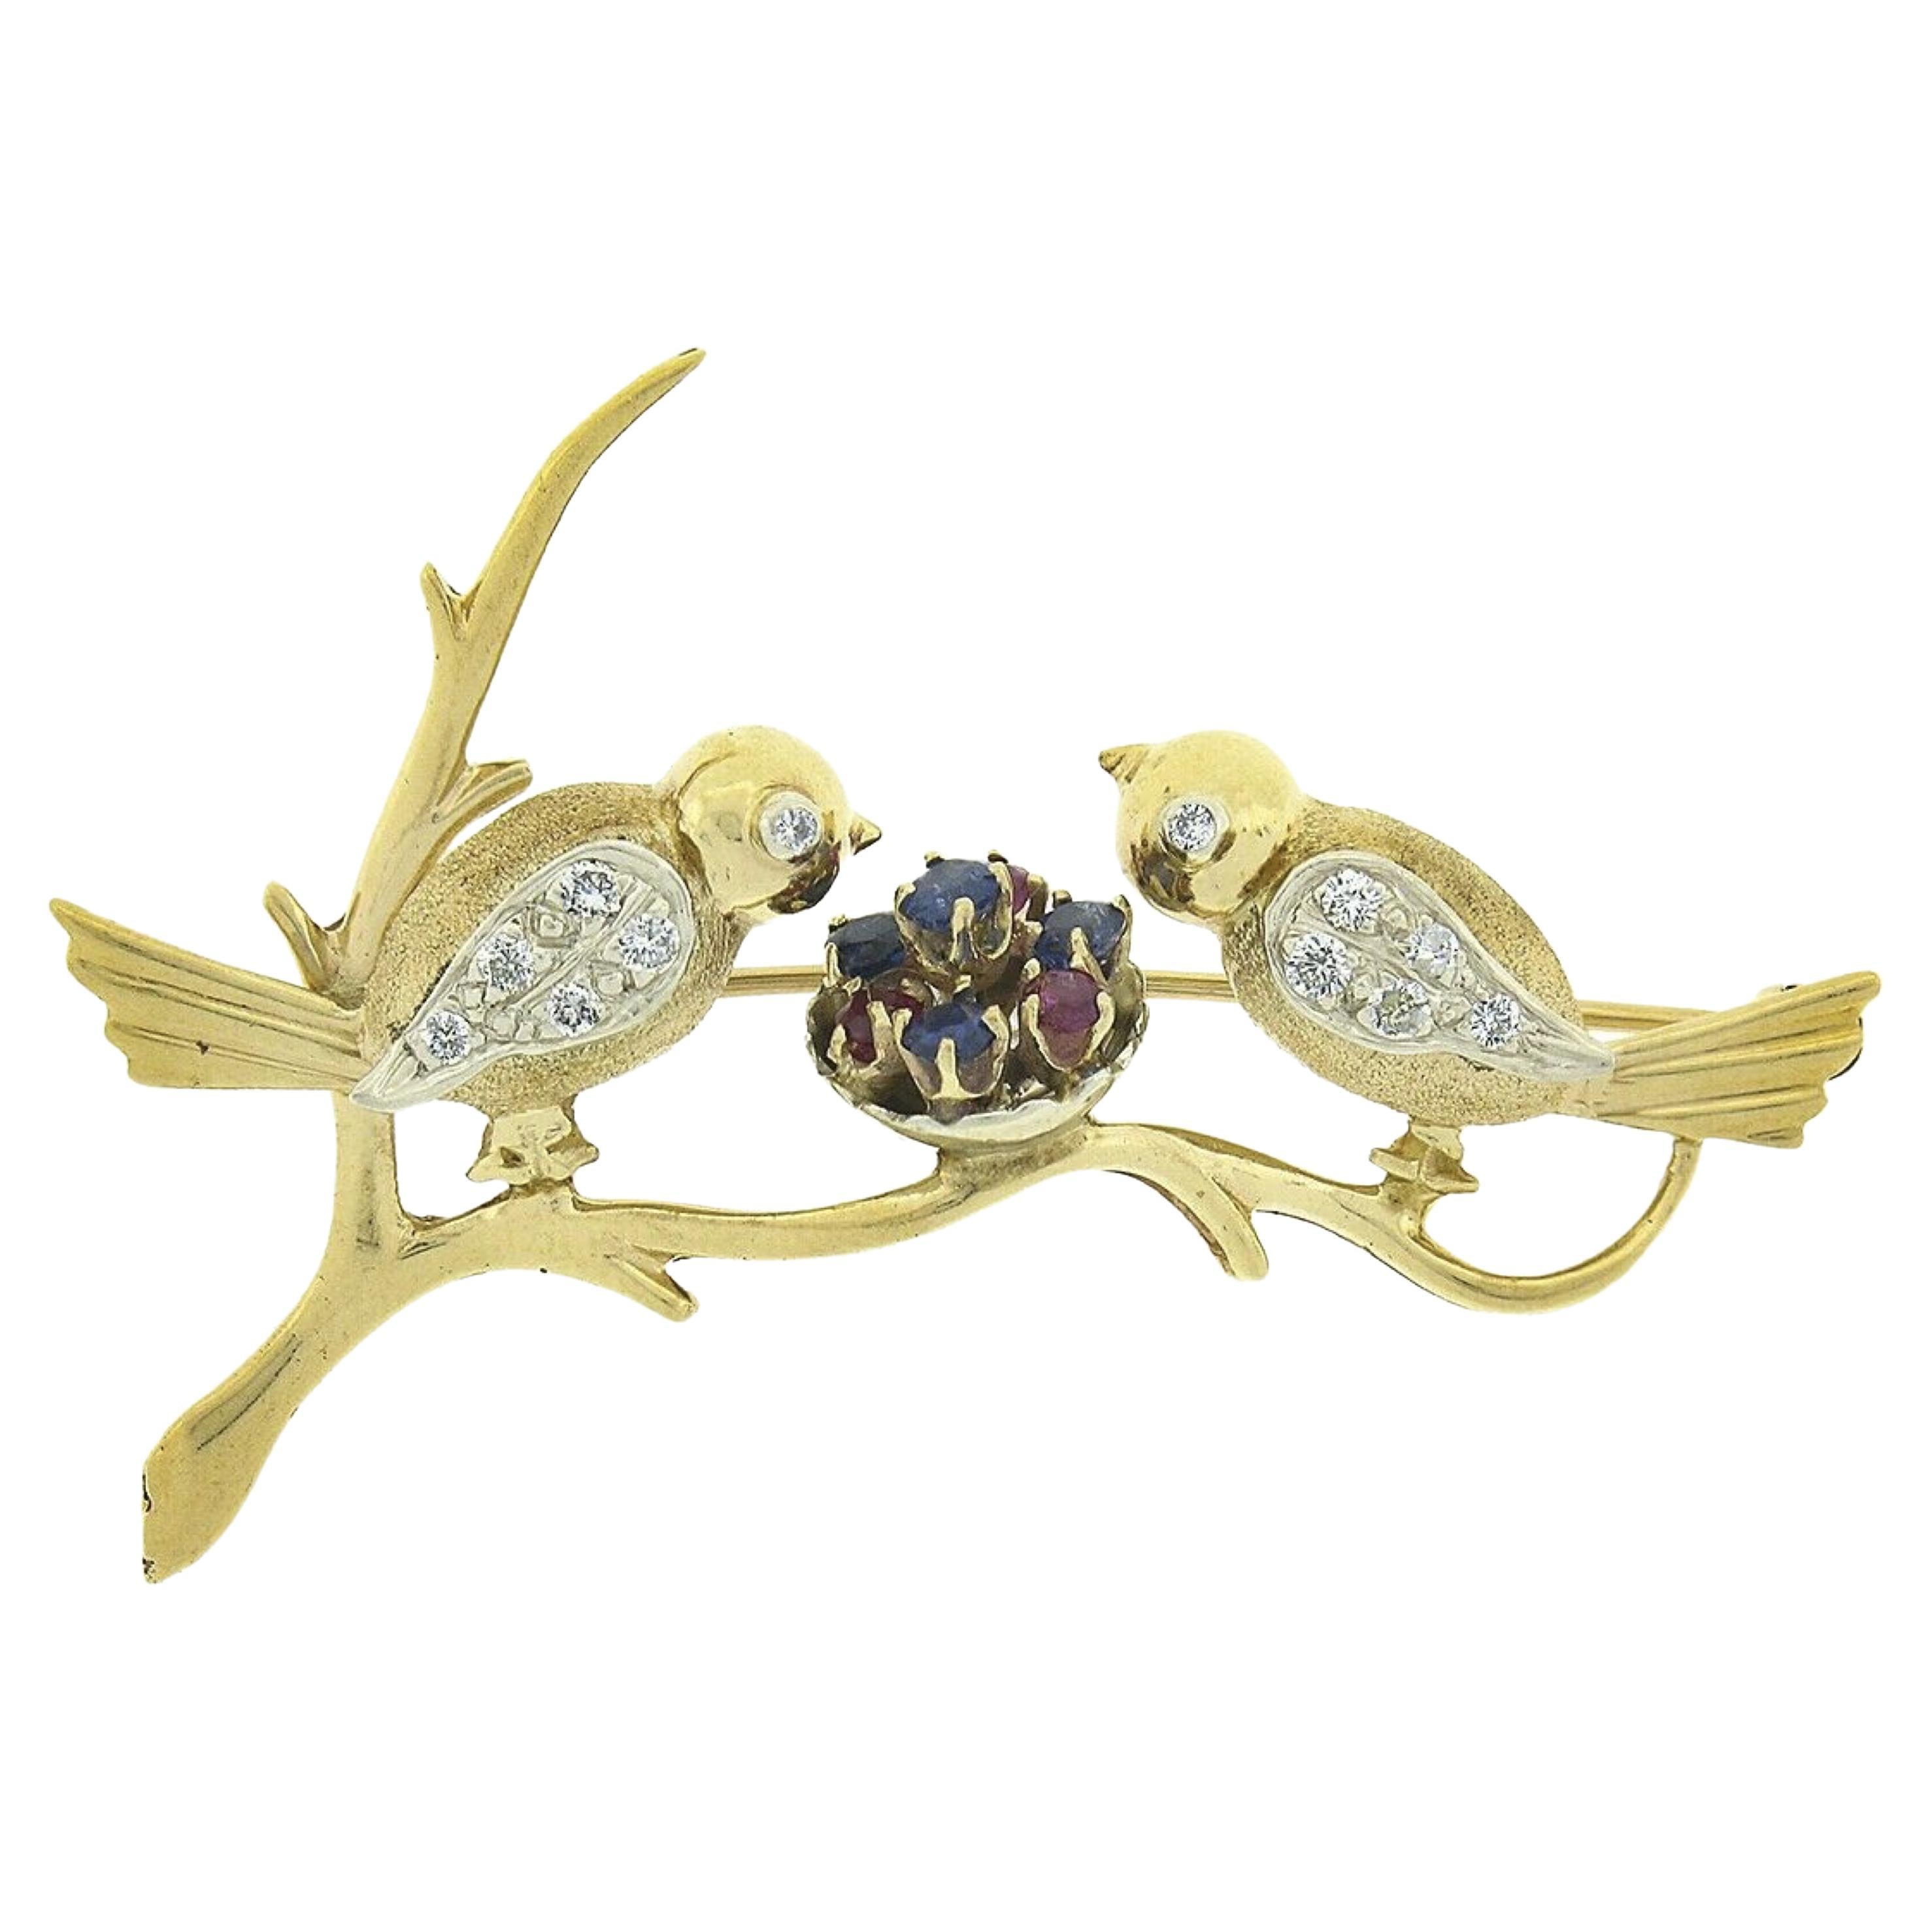 Vintage 14K Gold Diamond Ruby & Sapphire Love Birds w/ Nest on Branch Pin Brooch